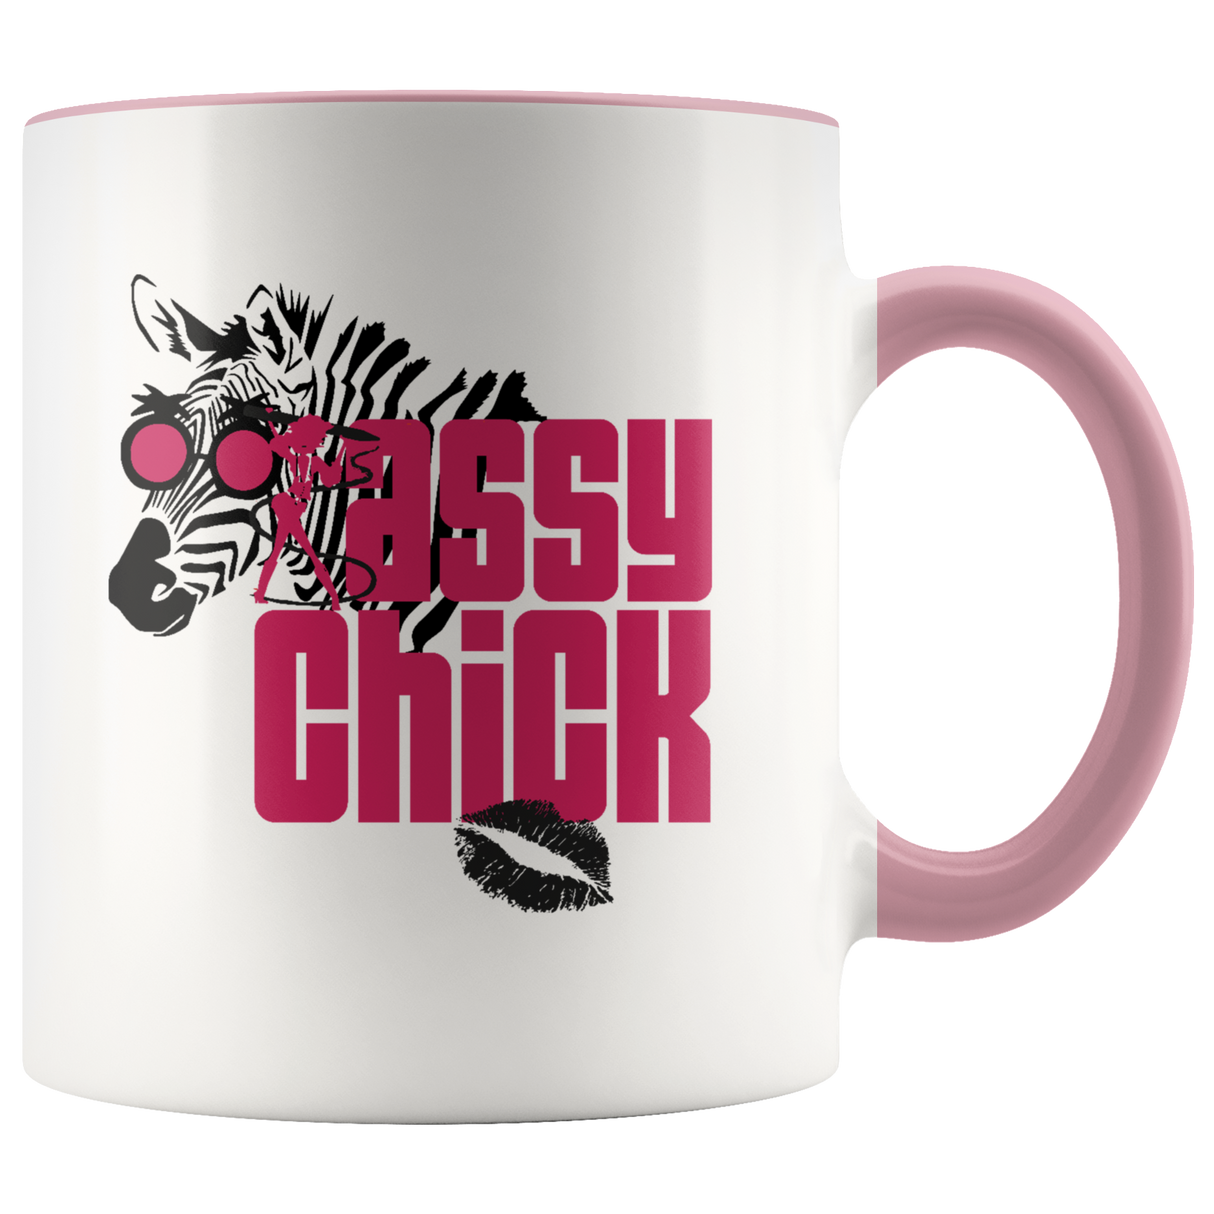 Sassy Chick Zebra Accent Ceramic Coffee Mug - Pink | Shop Sassy Chick